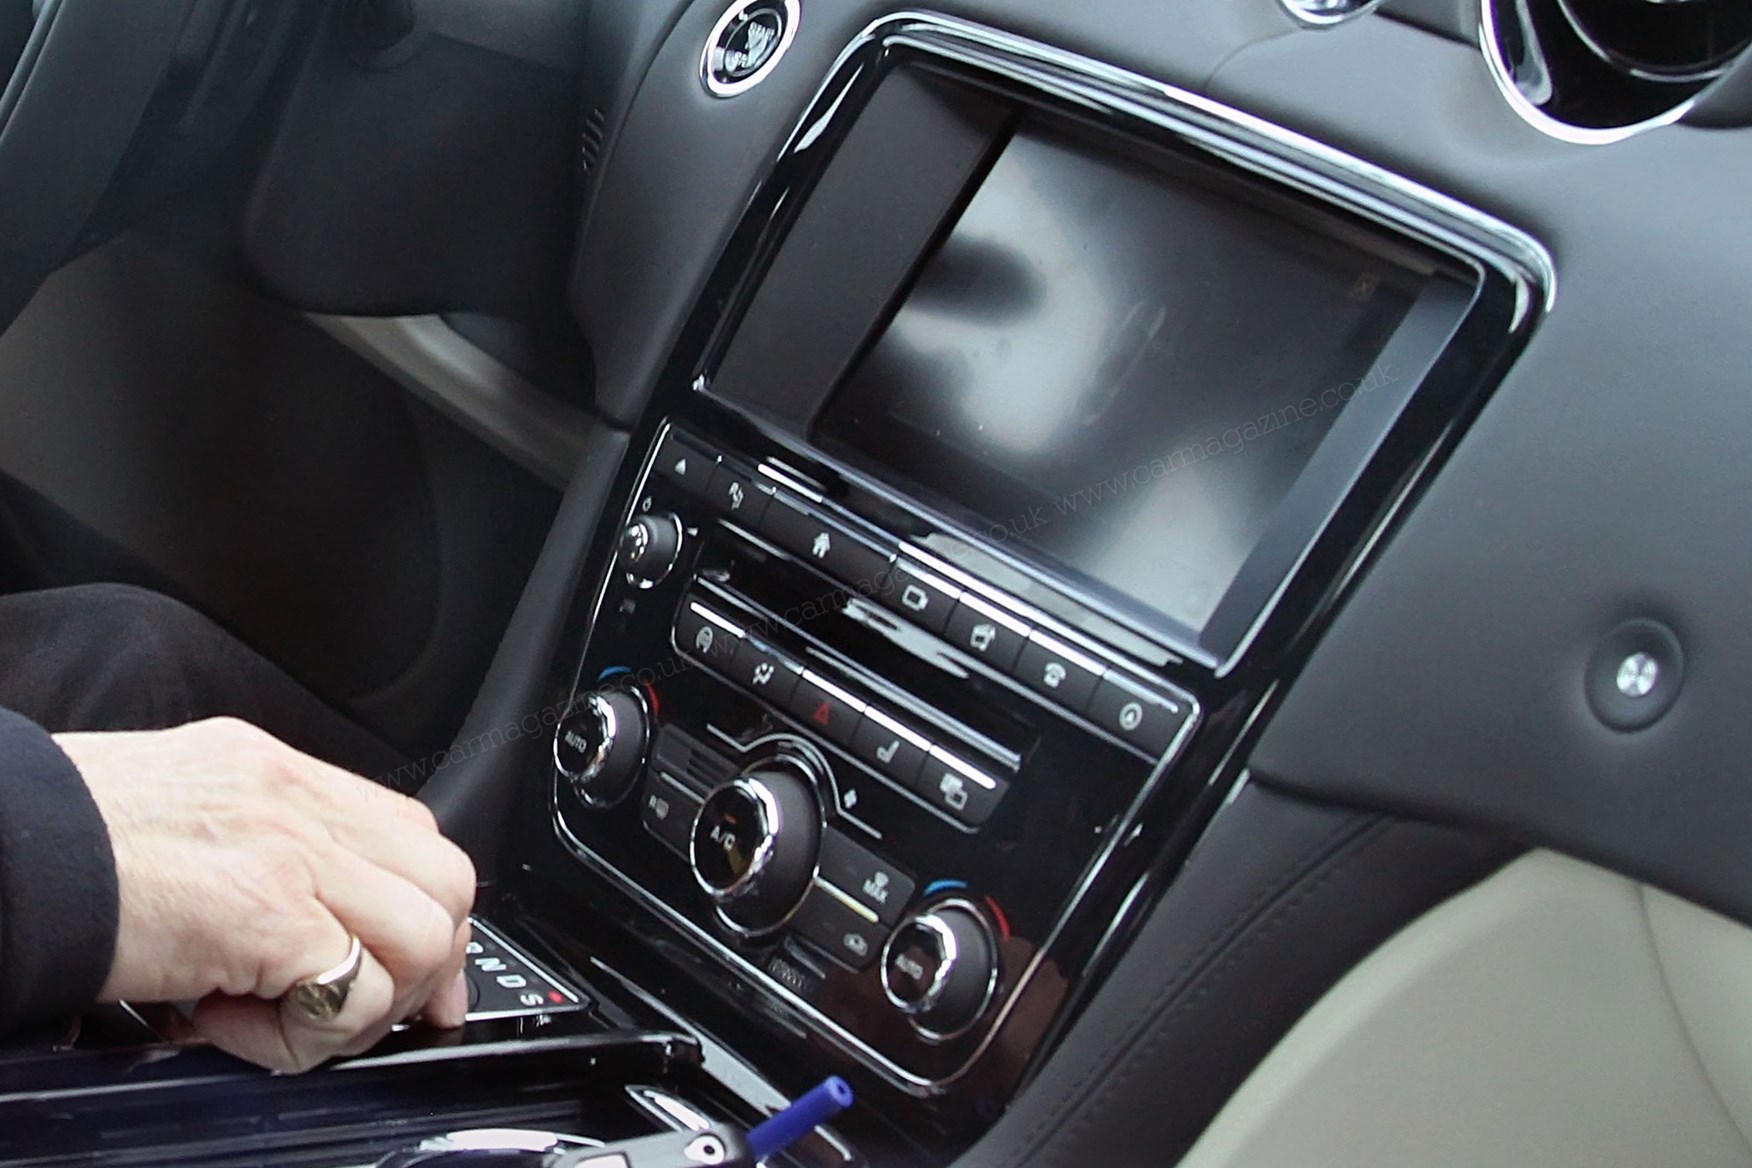 Inside The 2016 Jaguar Xj Incontrol And More Tech Car